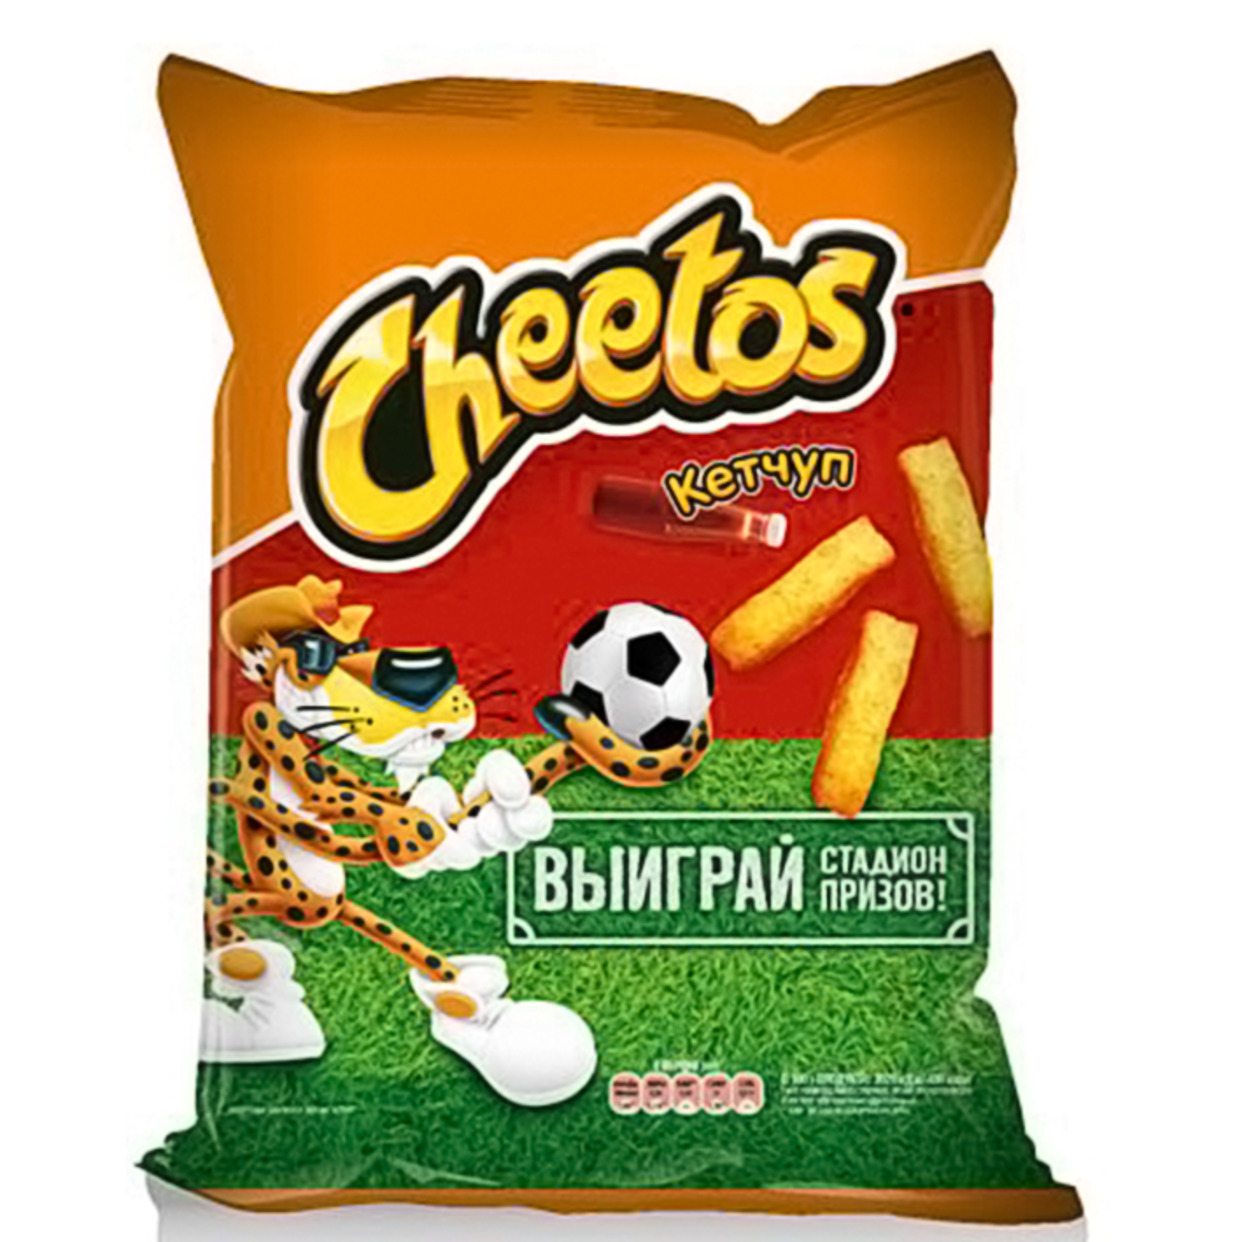 Кукурузные палочки Cheetos со вкусом кетчупа 85 г